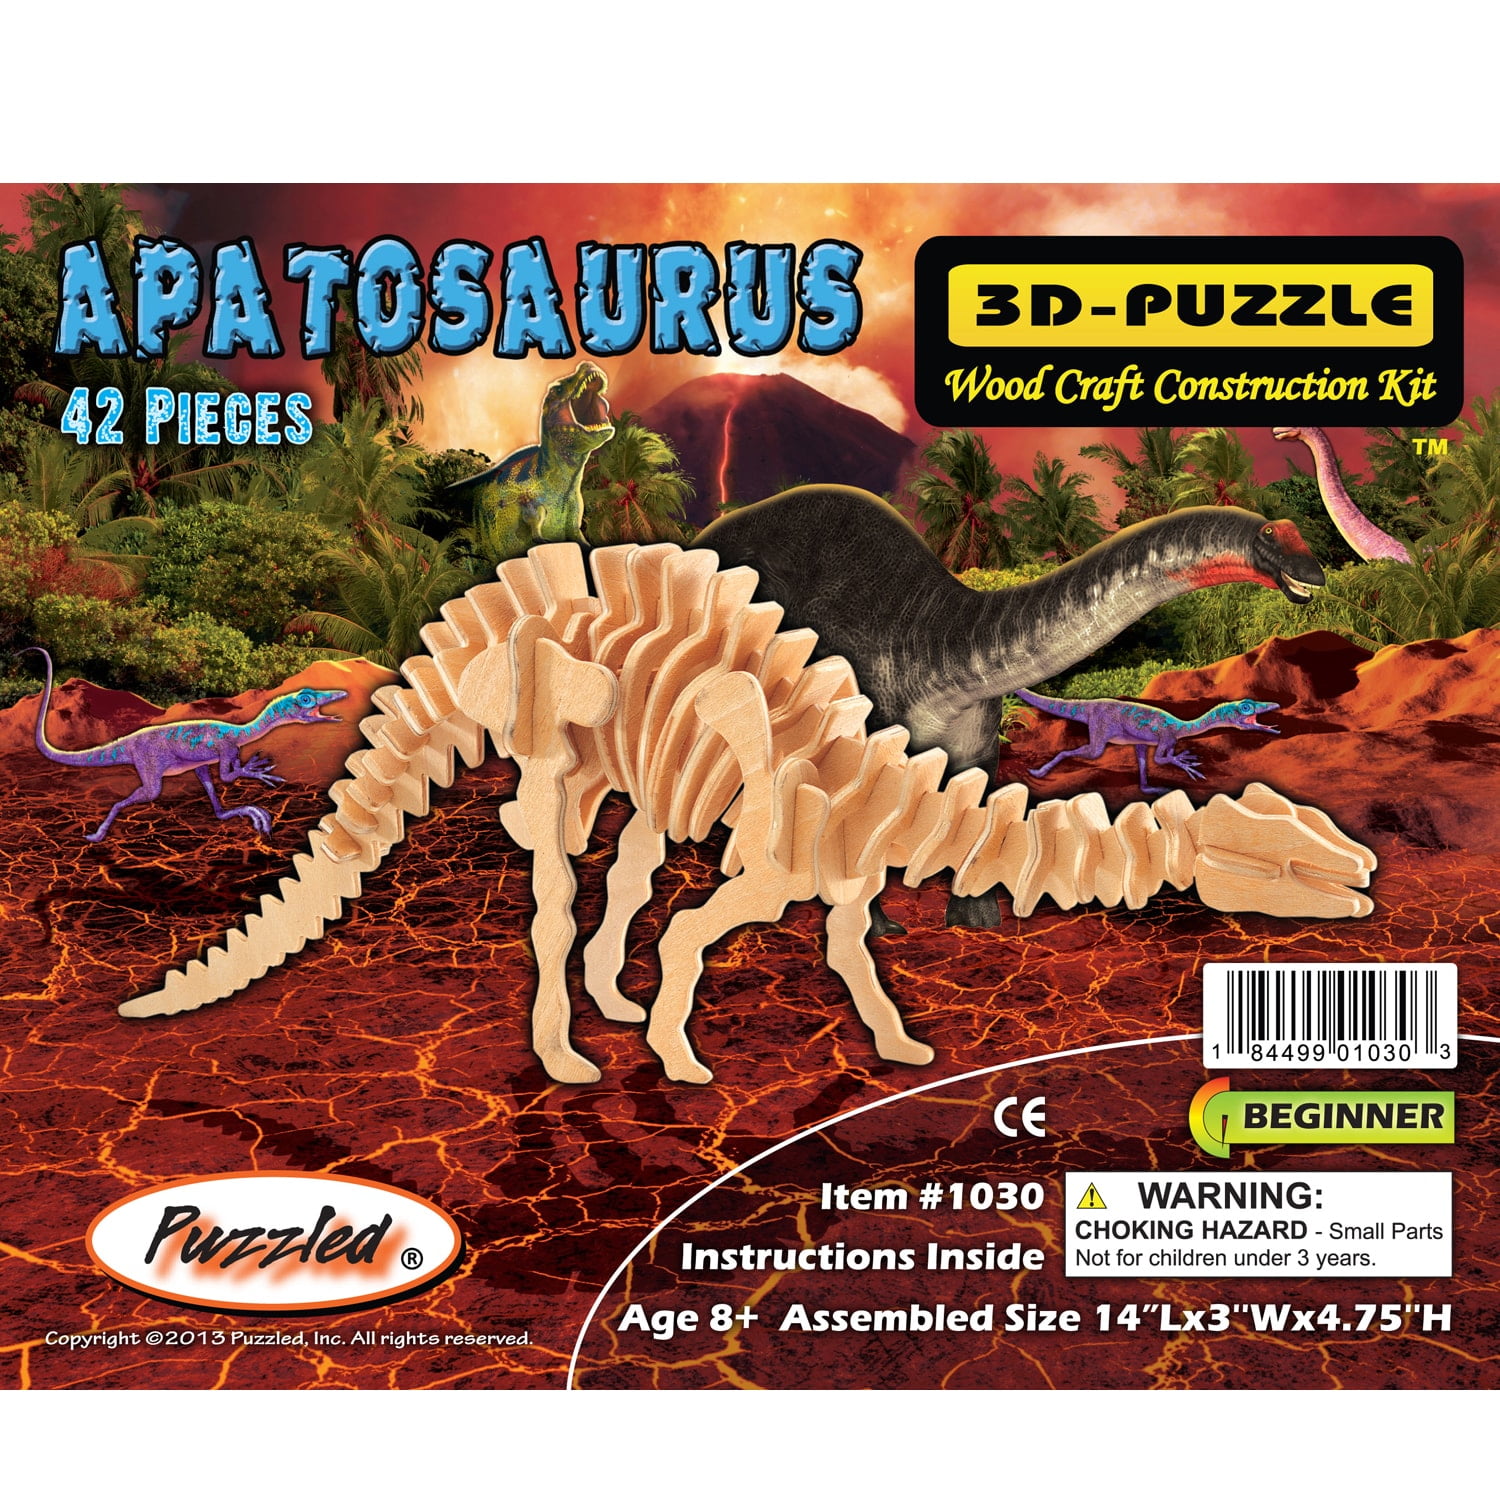 NEW Apatosaurus Wooden Build-A-Dinosaur 3D Model Kit - Small Heebie Jeebies